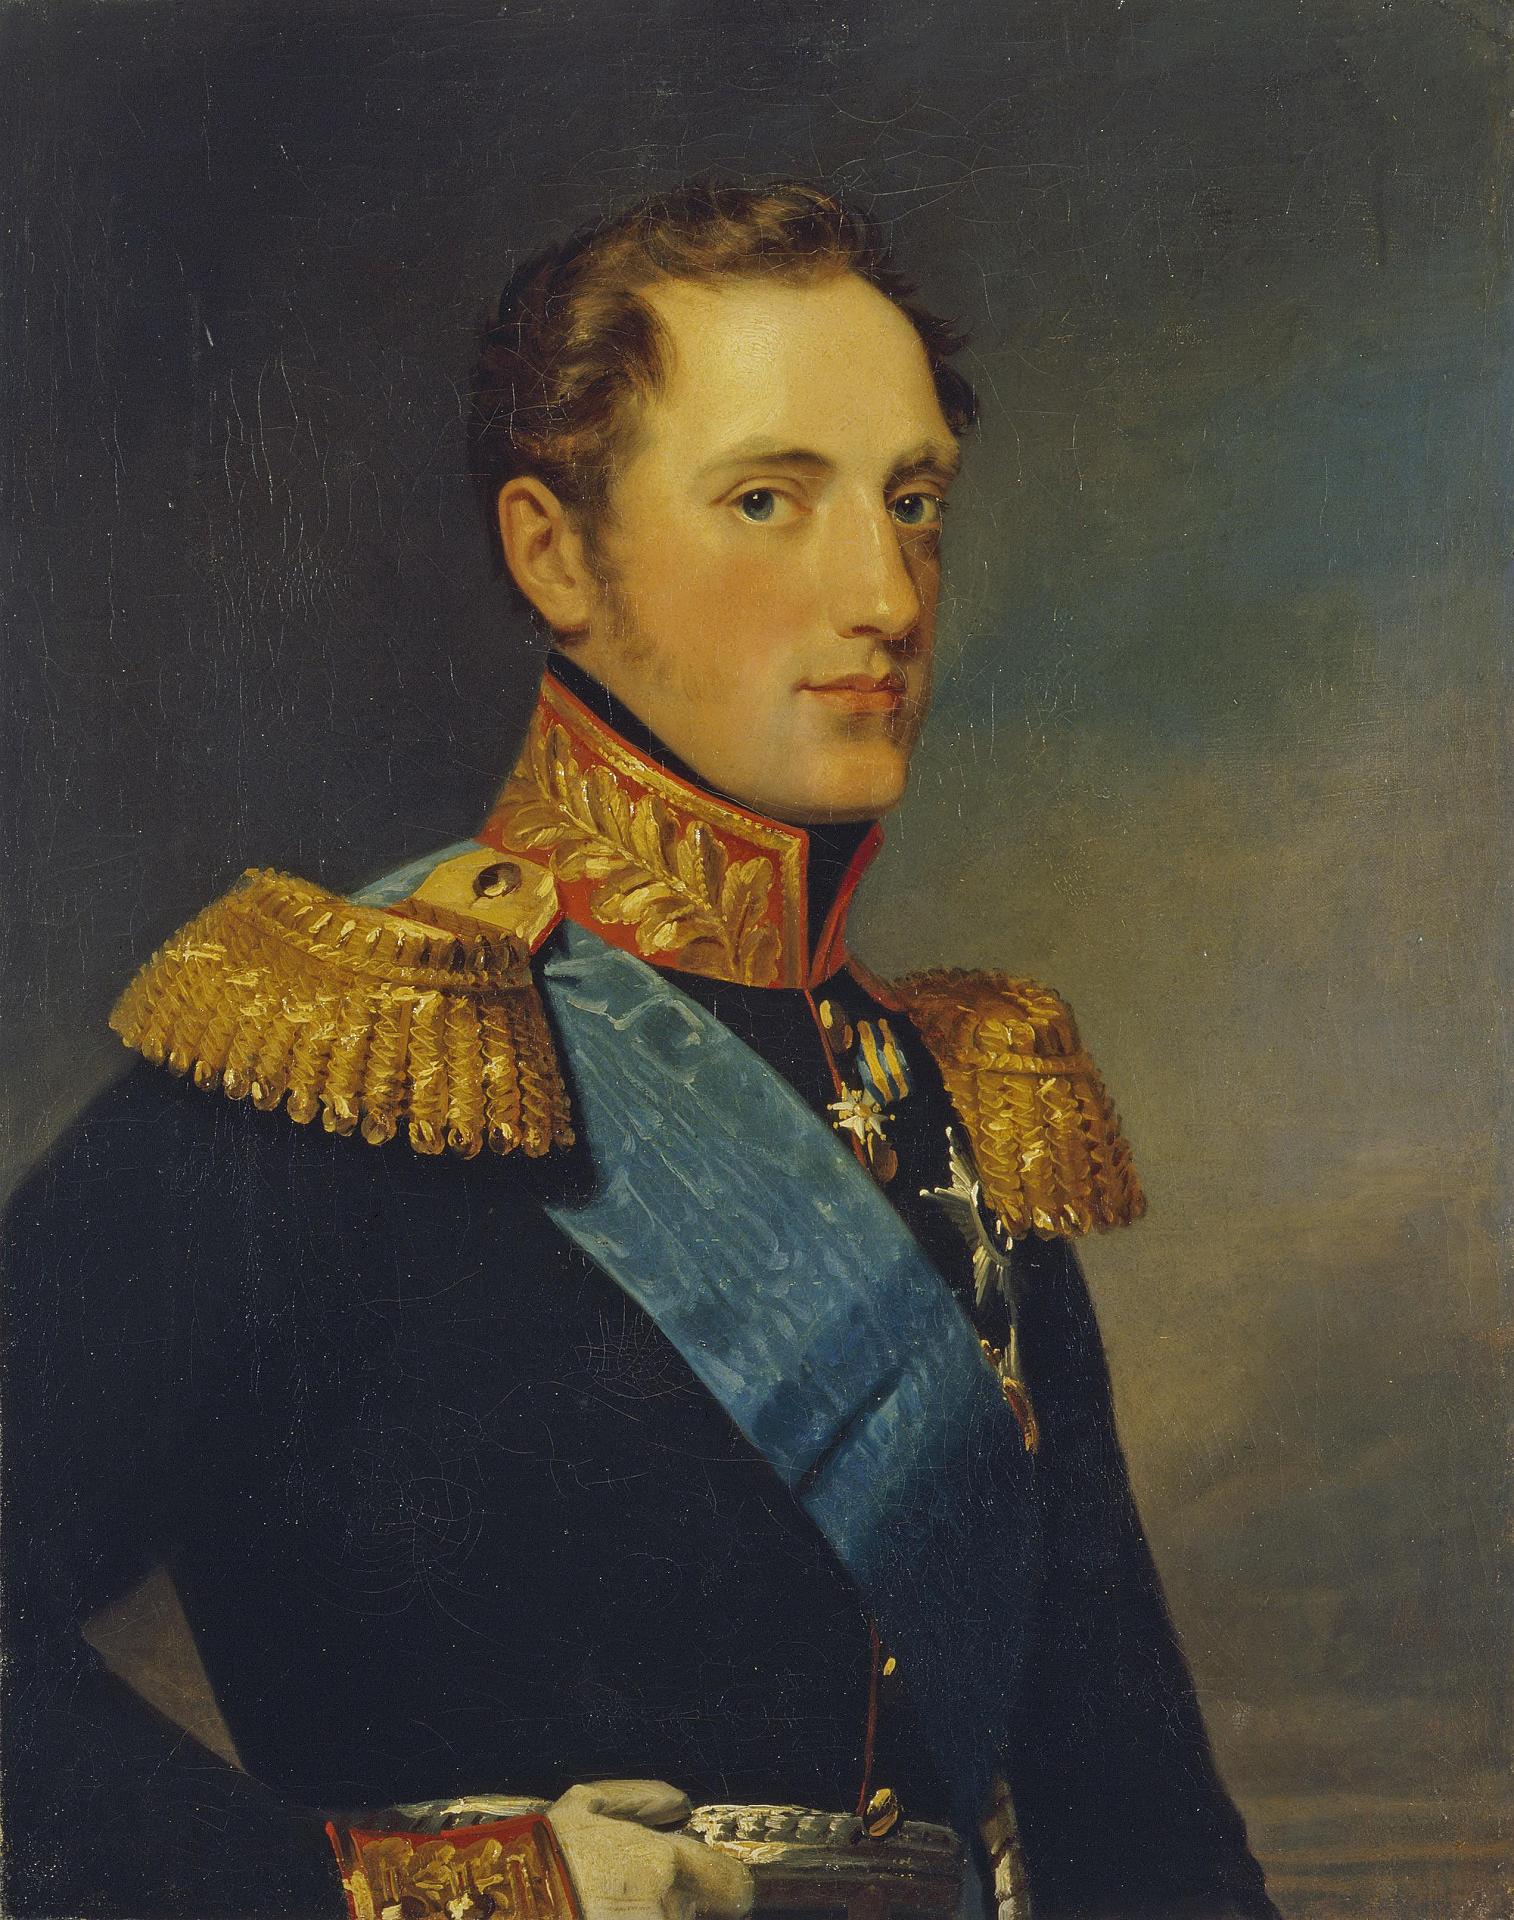 Джордж Доу. "Портрет великого князя Николая Павловича". 1820-е.